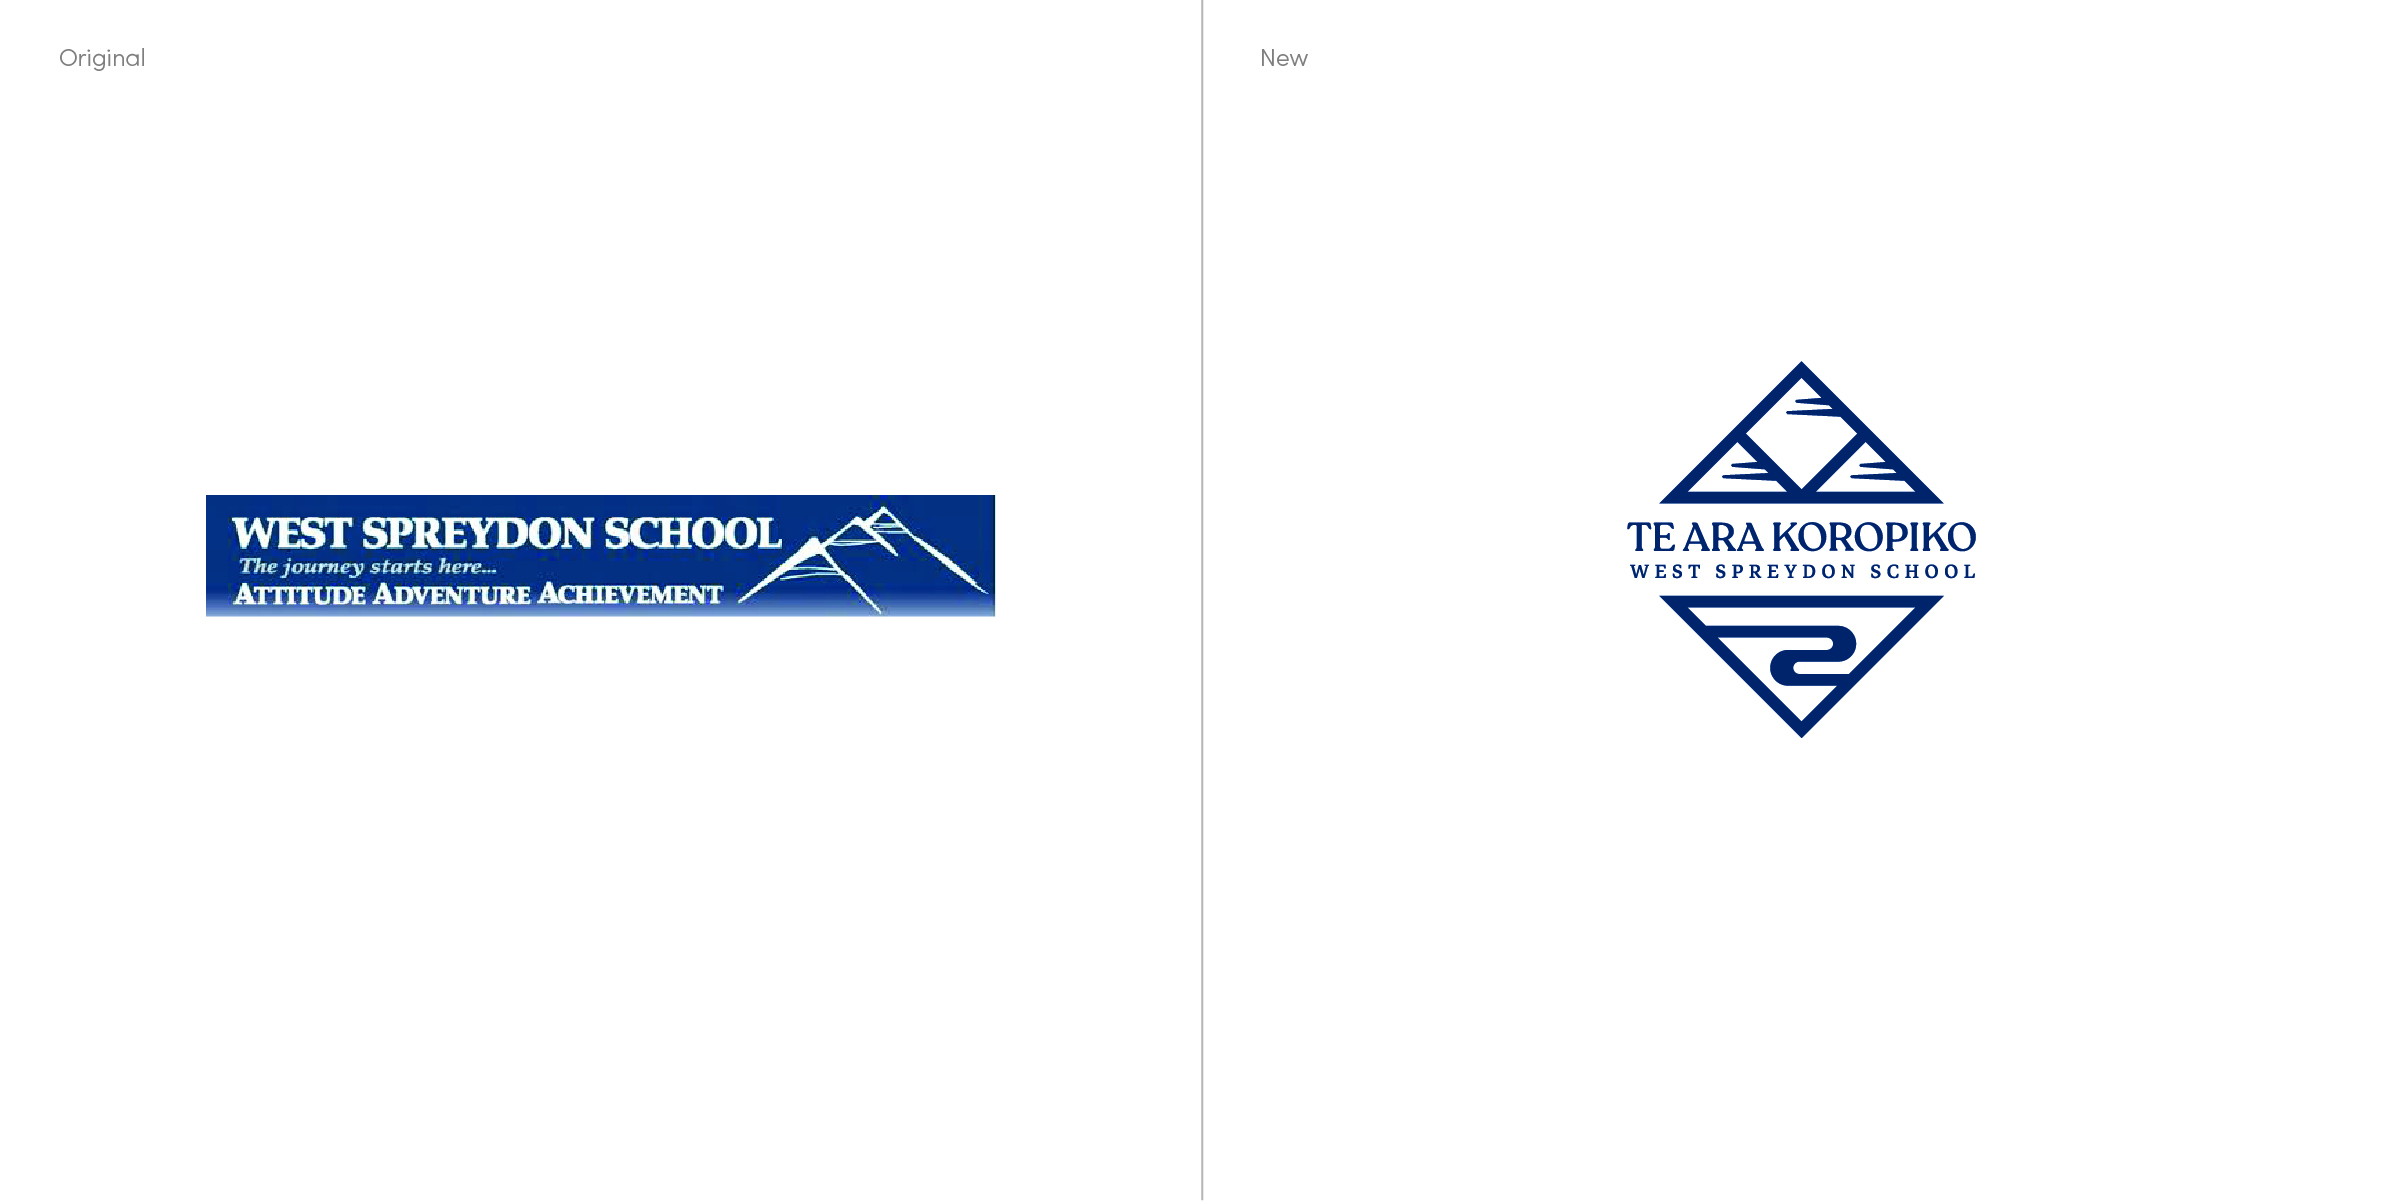 Te Ara Koropiko logo redesign before and after